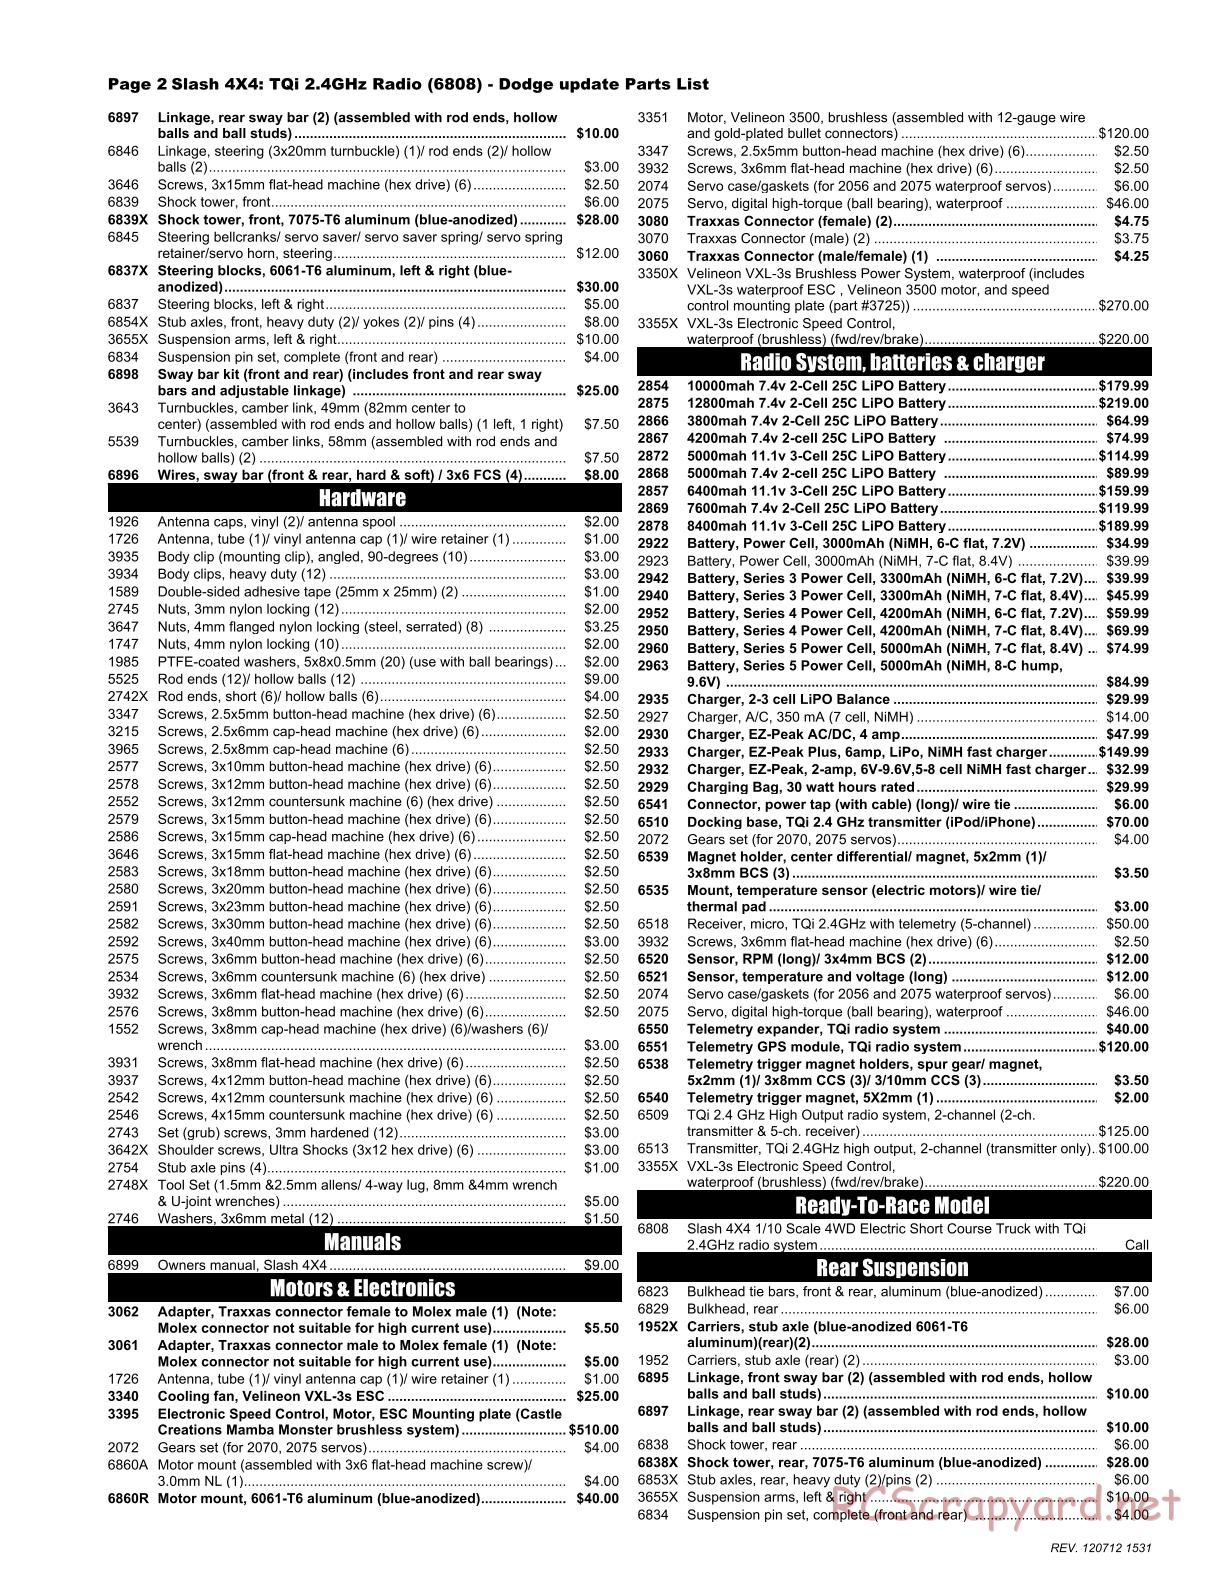 Traxxas - Slash 4x4 - Parts List - Page 2